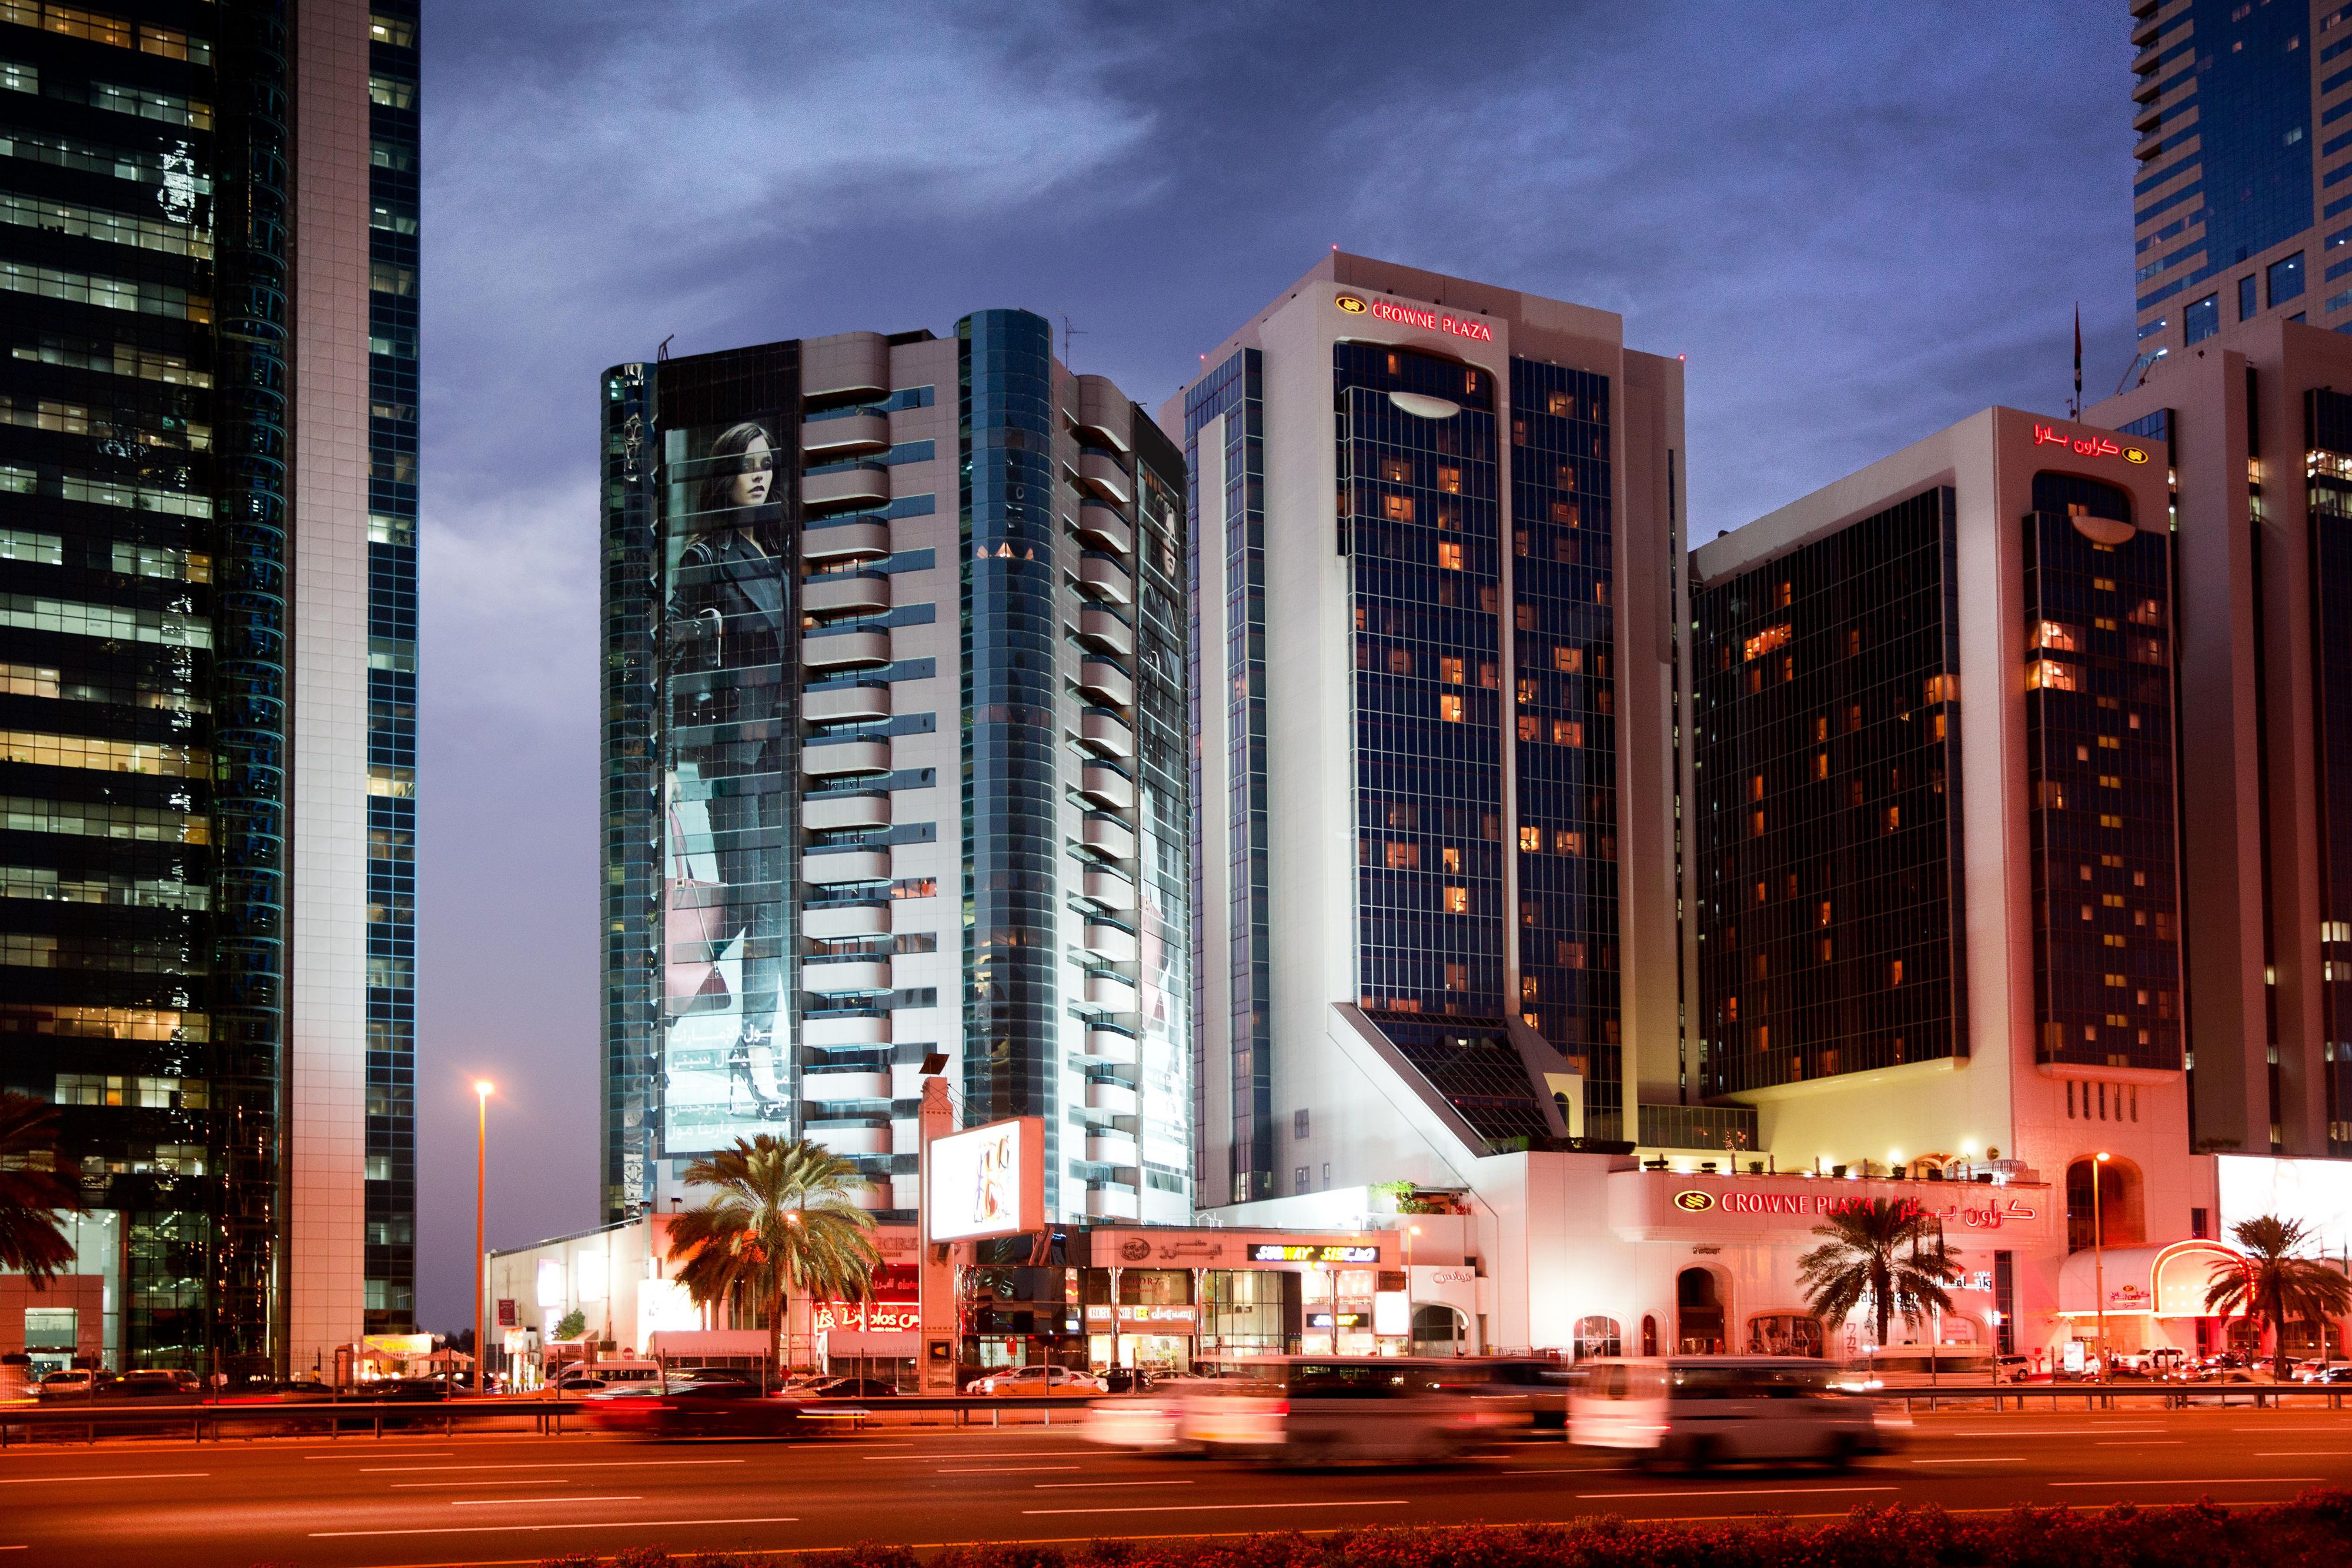 Crowne Plaza Dubai - a landmark on Shaikh Zayed Road in Dubai